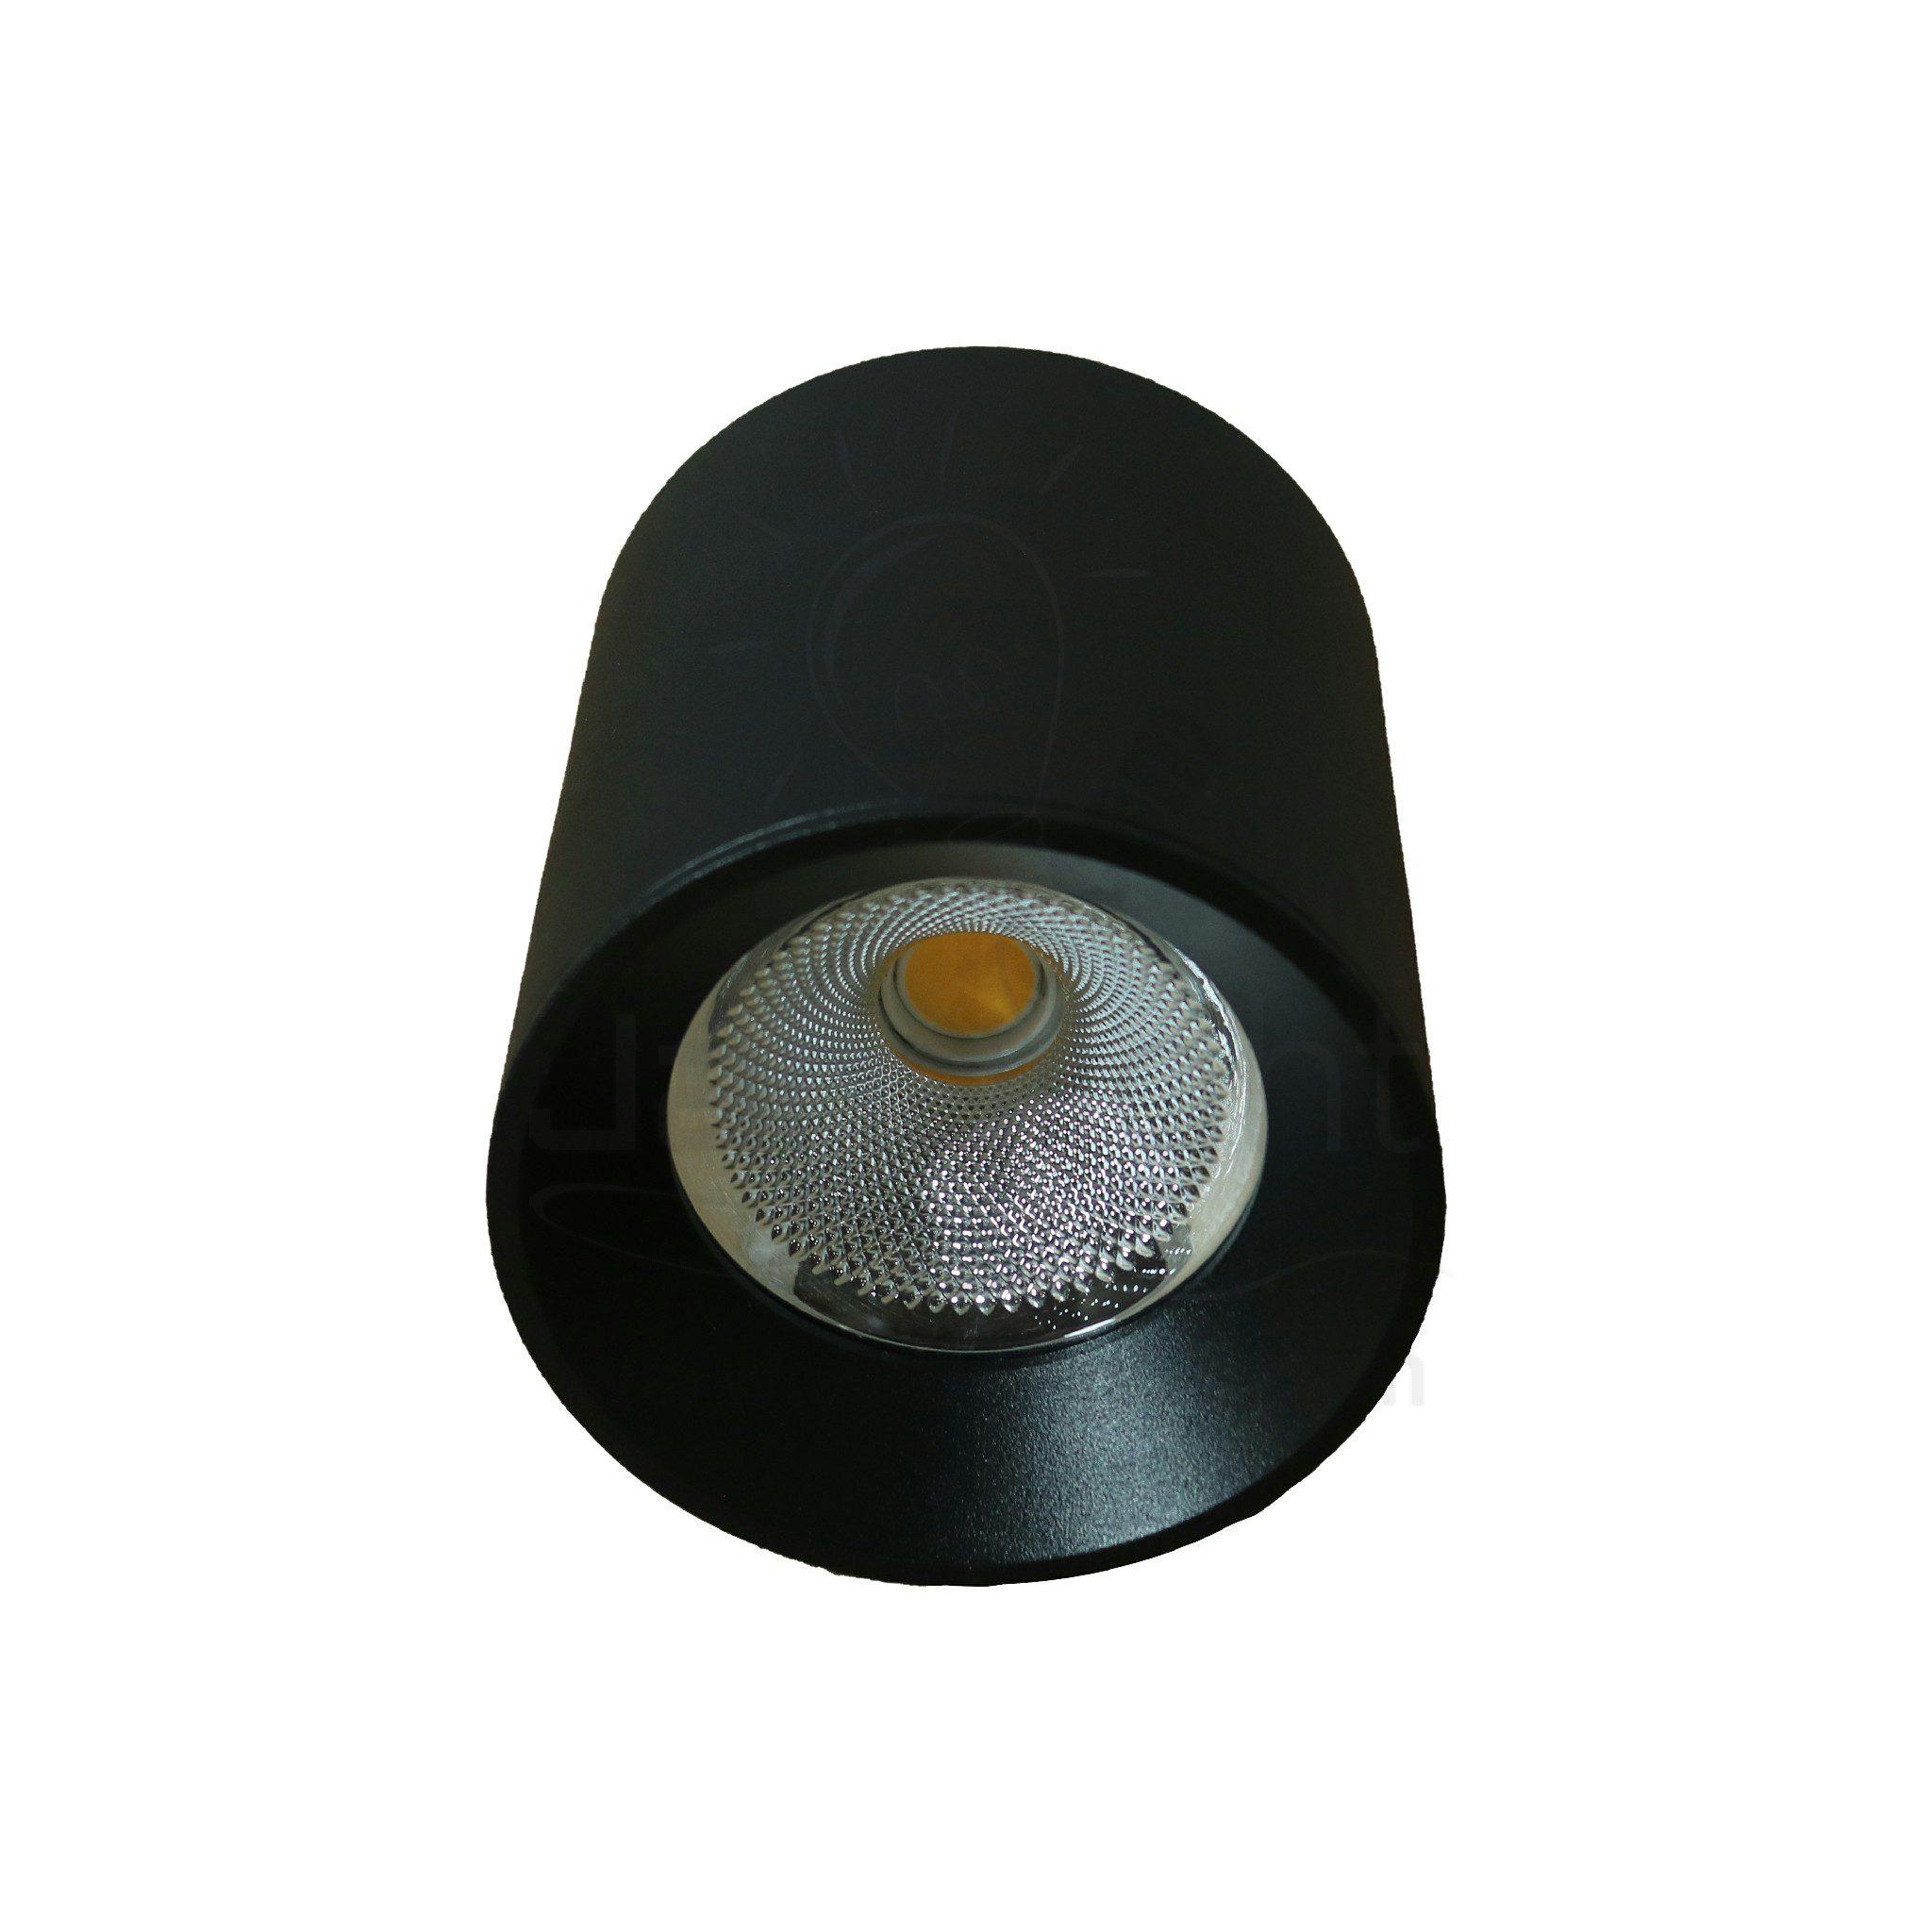 سبوت لايت سلندر 15 وات مدور اسود خارجي COB ايميكا black round cylinder spotlight prominent 15 watt emeca COB